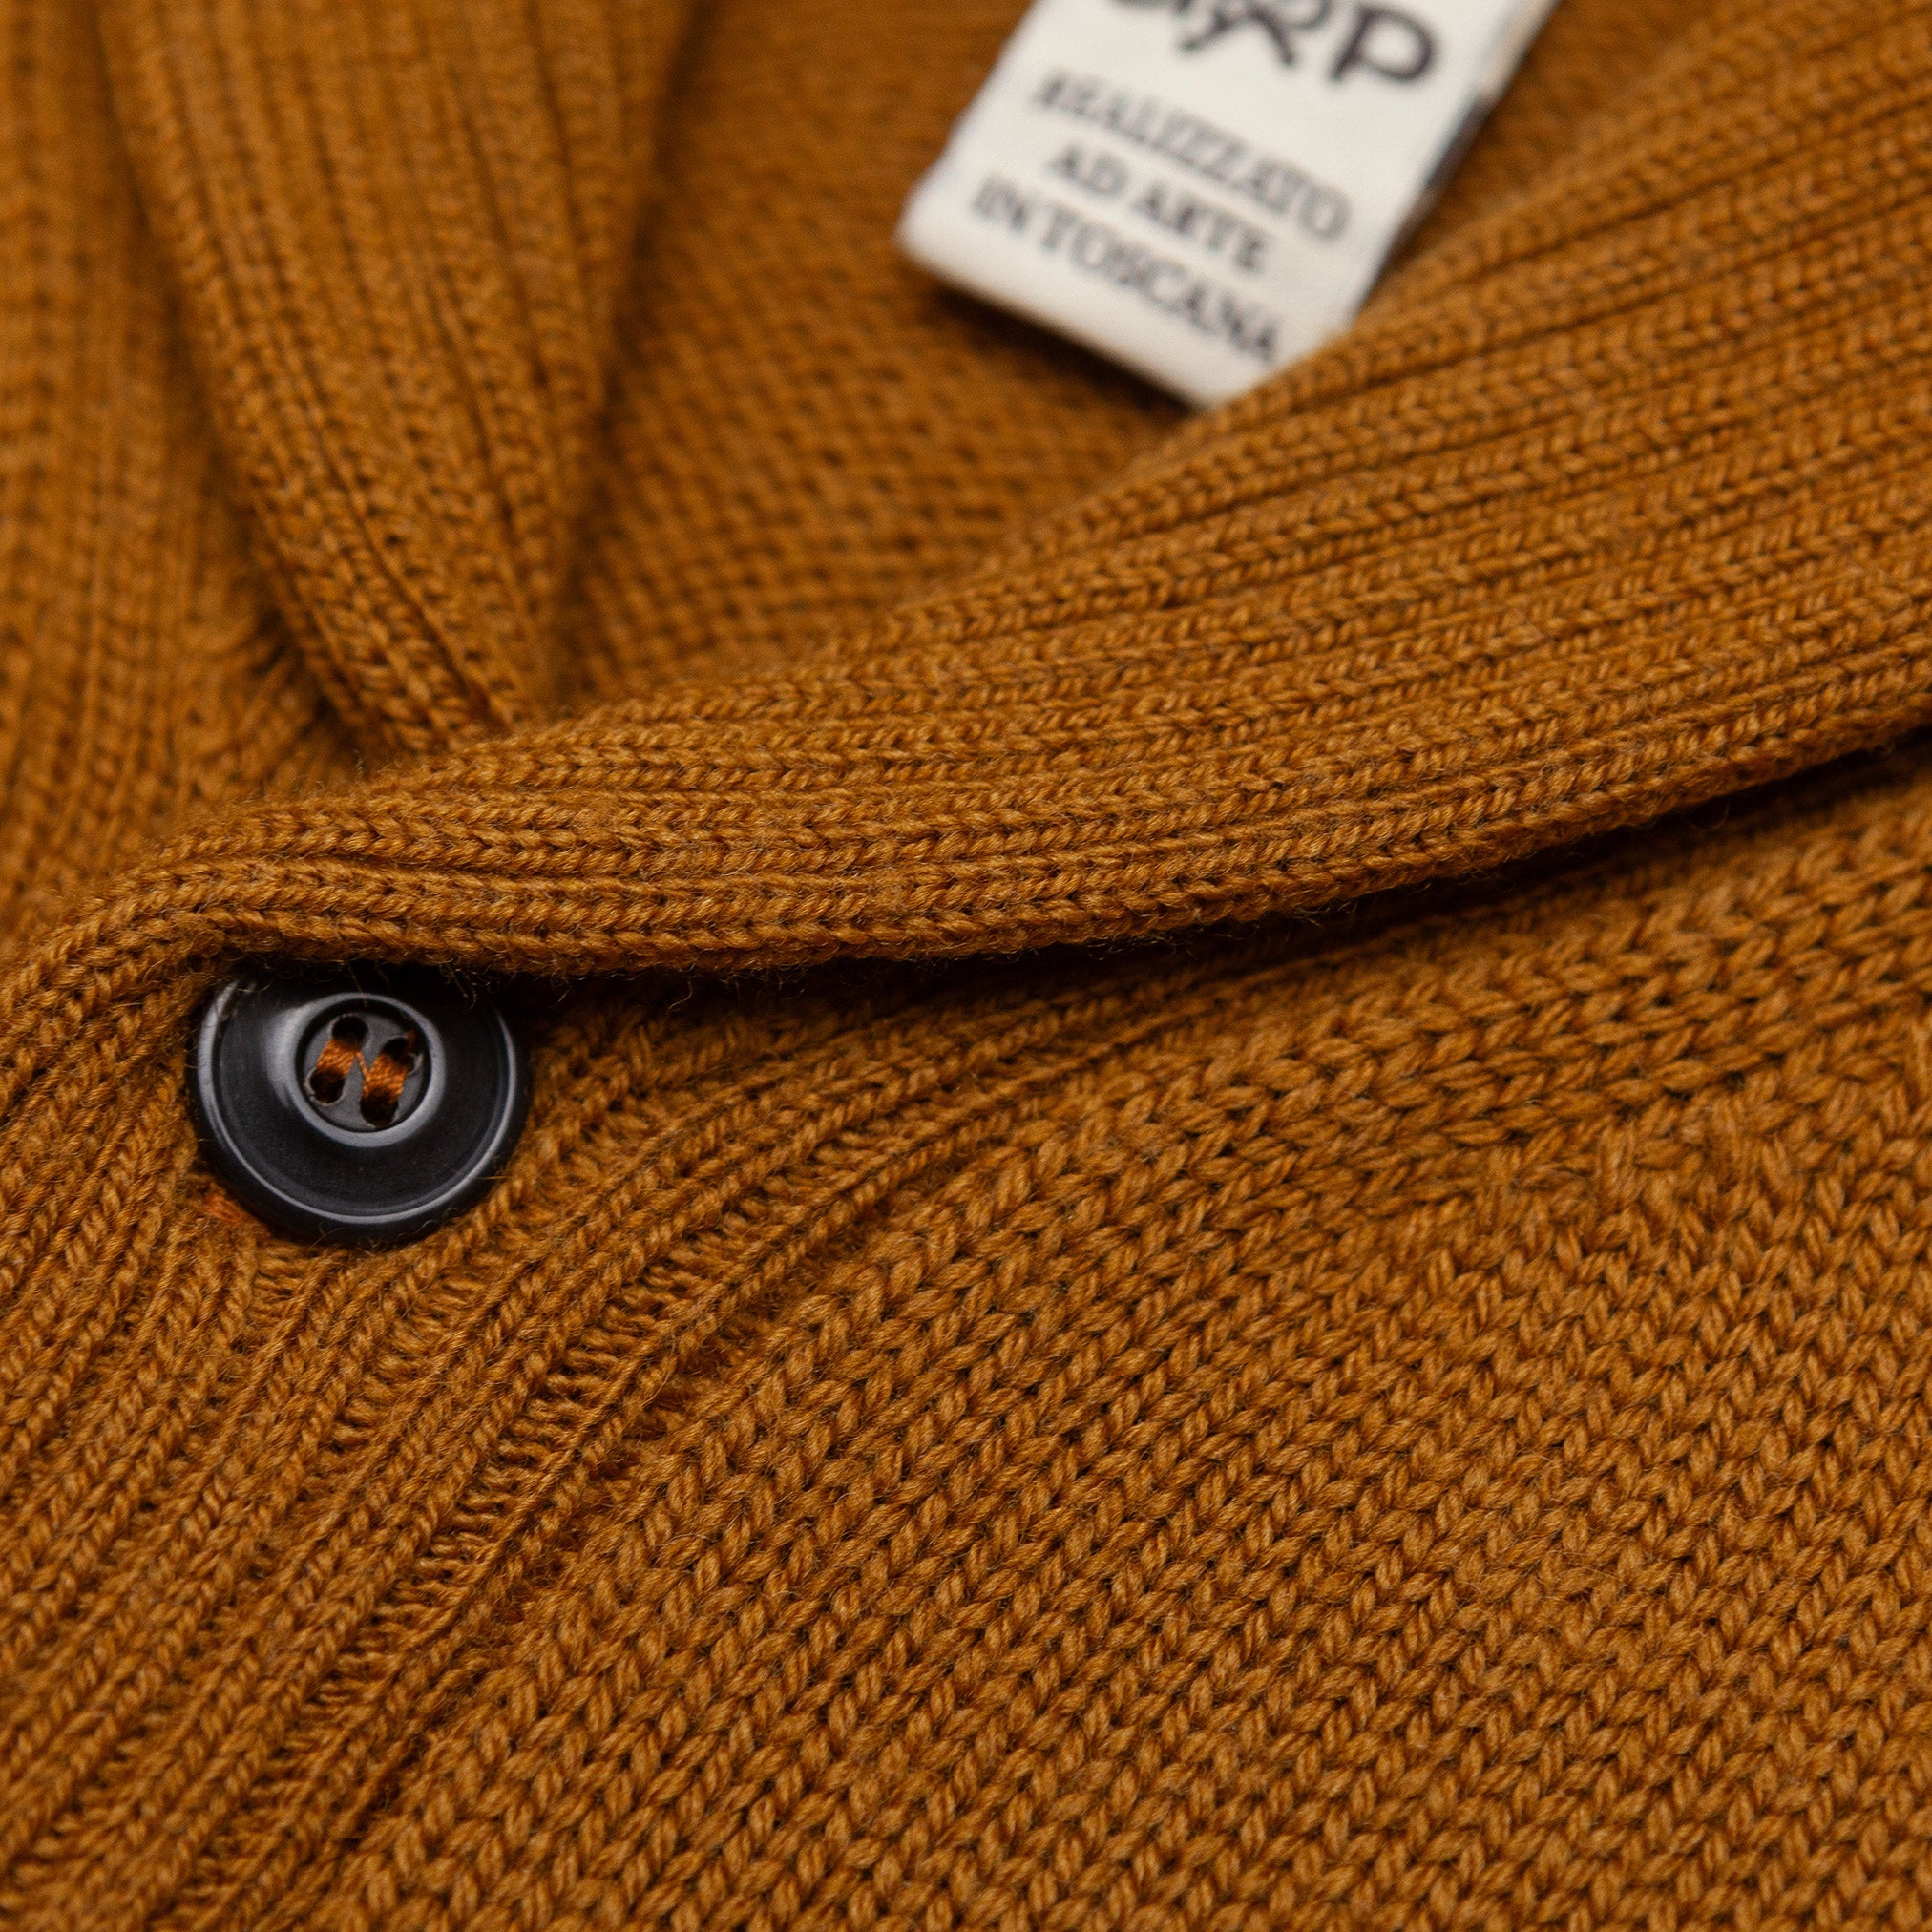 Shawl Collar Sweater in Ochre